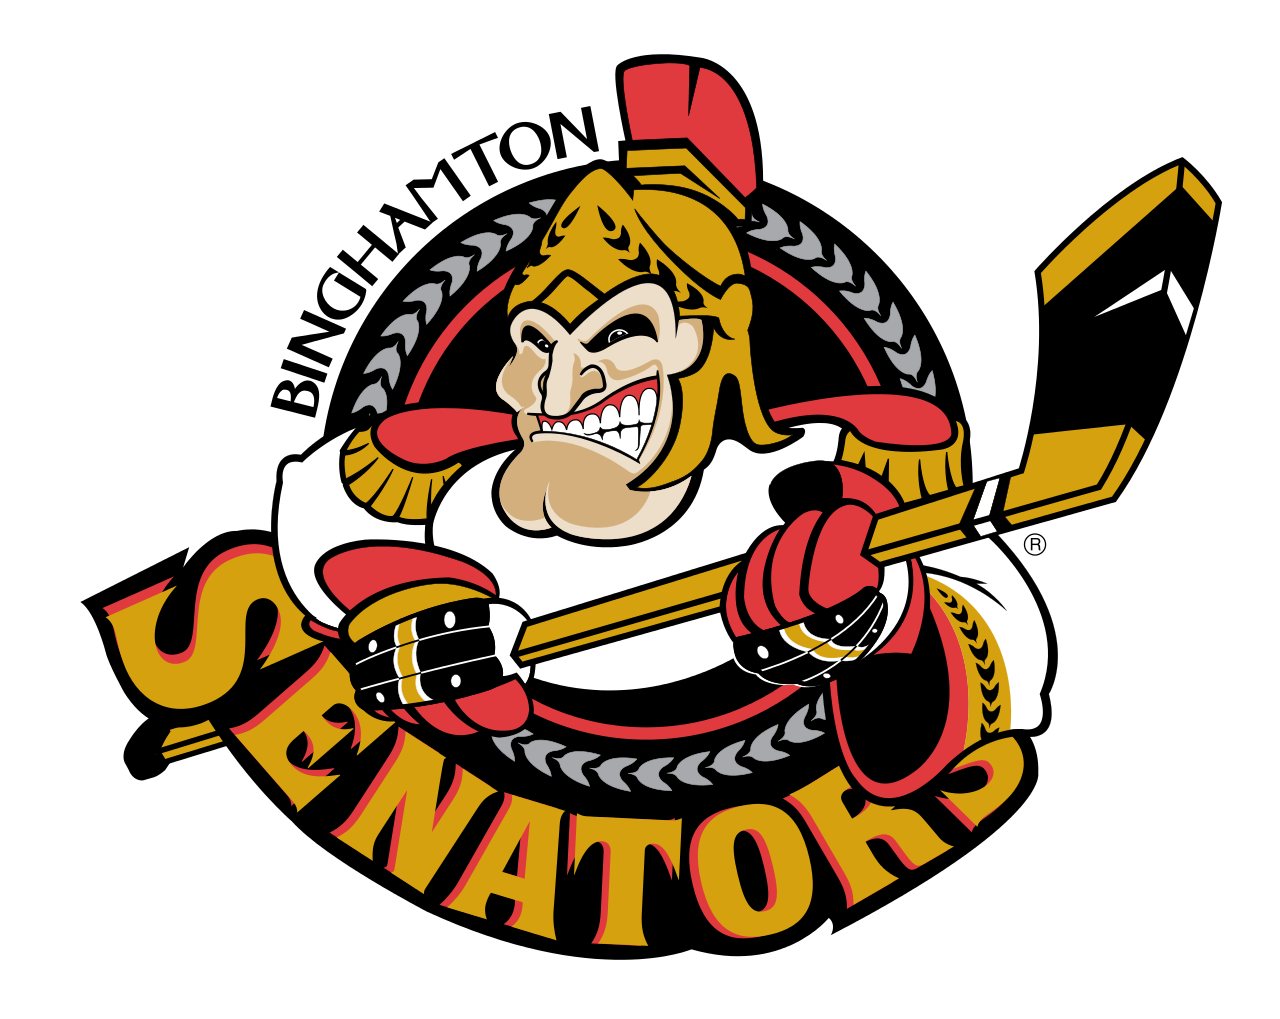 The Senators Are Leaving Binghamton